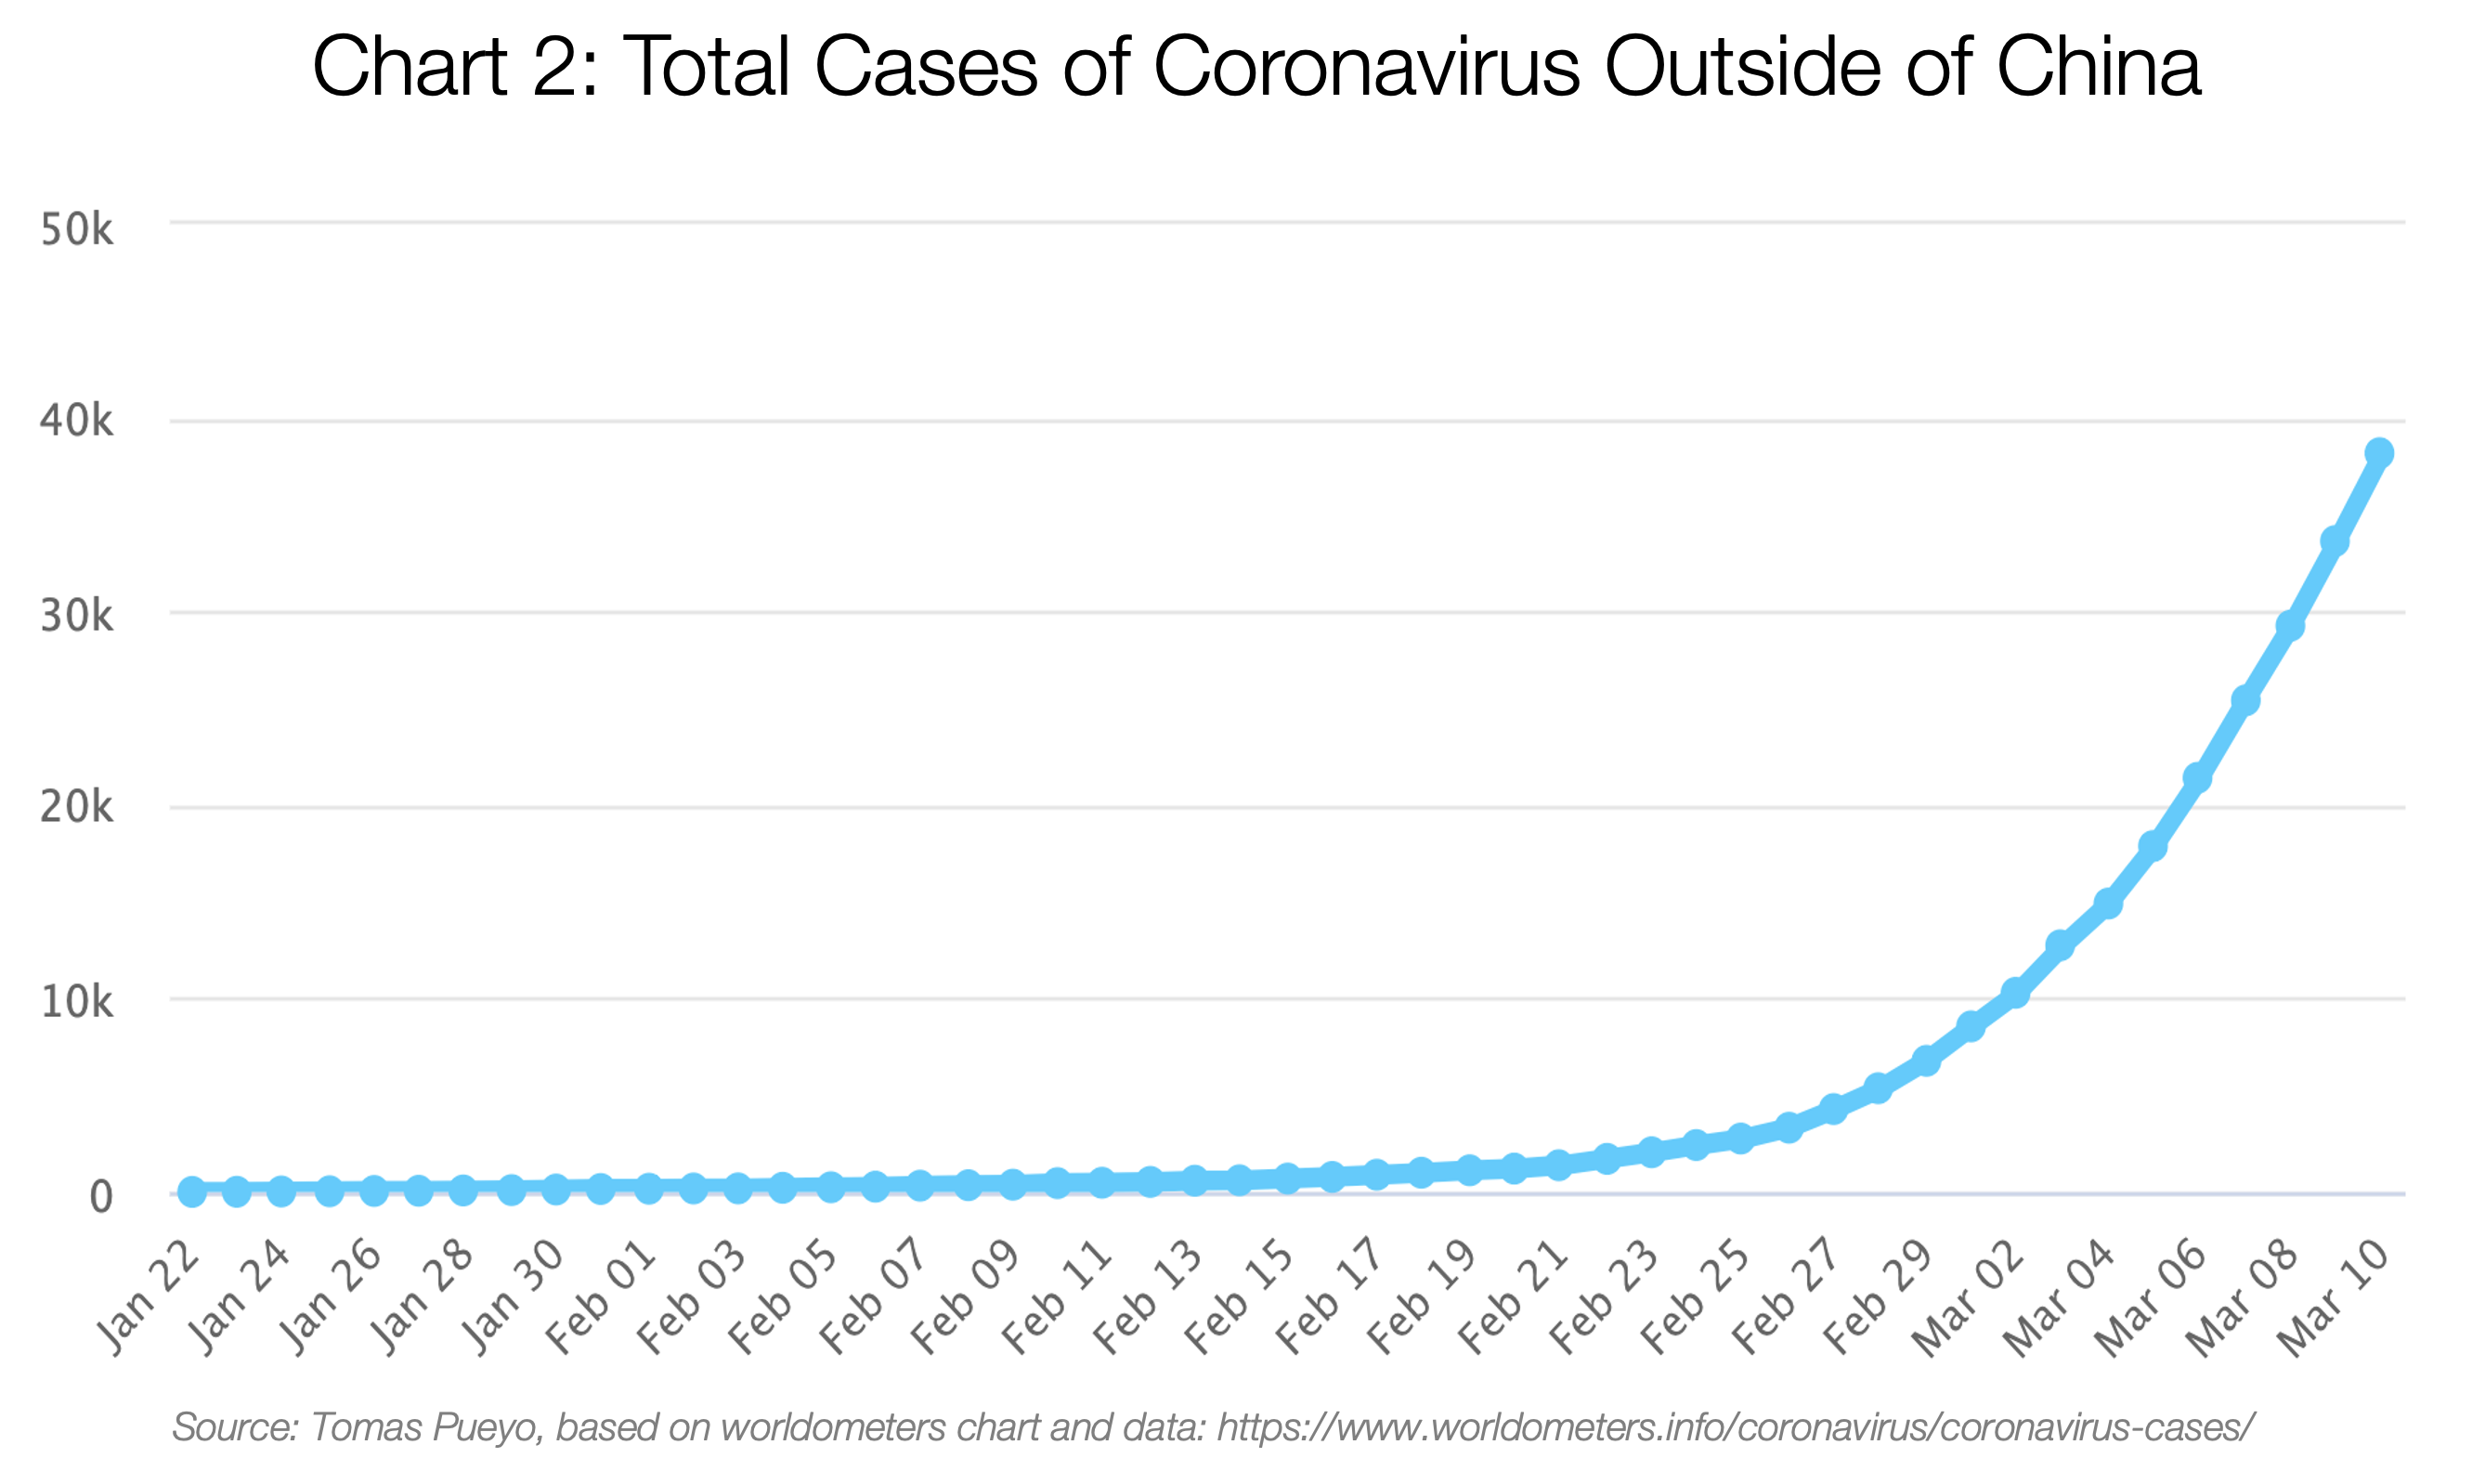 2. Total cases of Coronavirus Outside of China